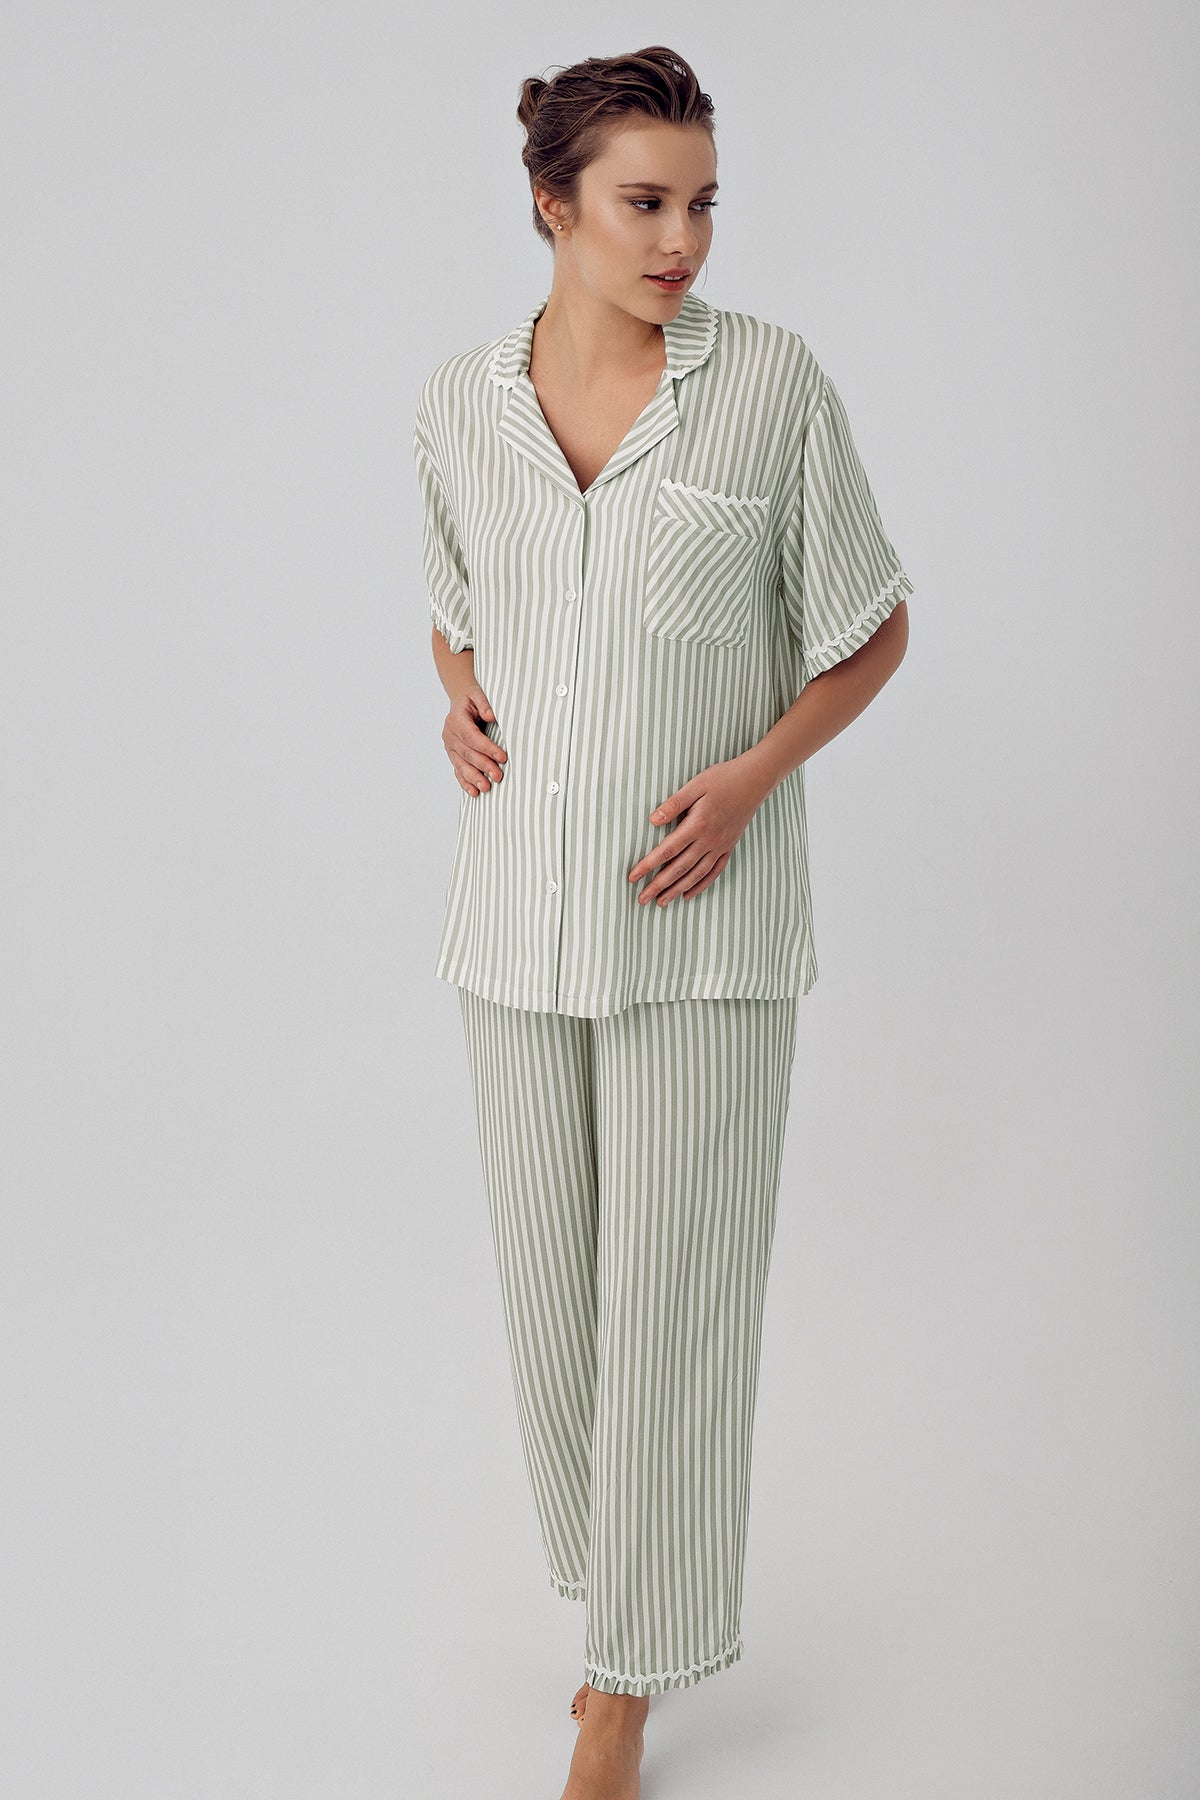 Shopymommy 16203 Striped Maternity & Nursing Pajamas Green